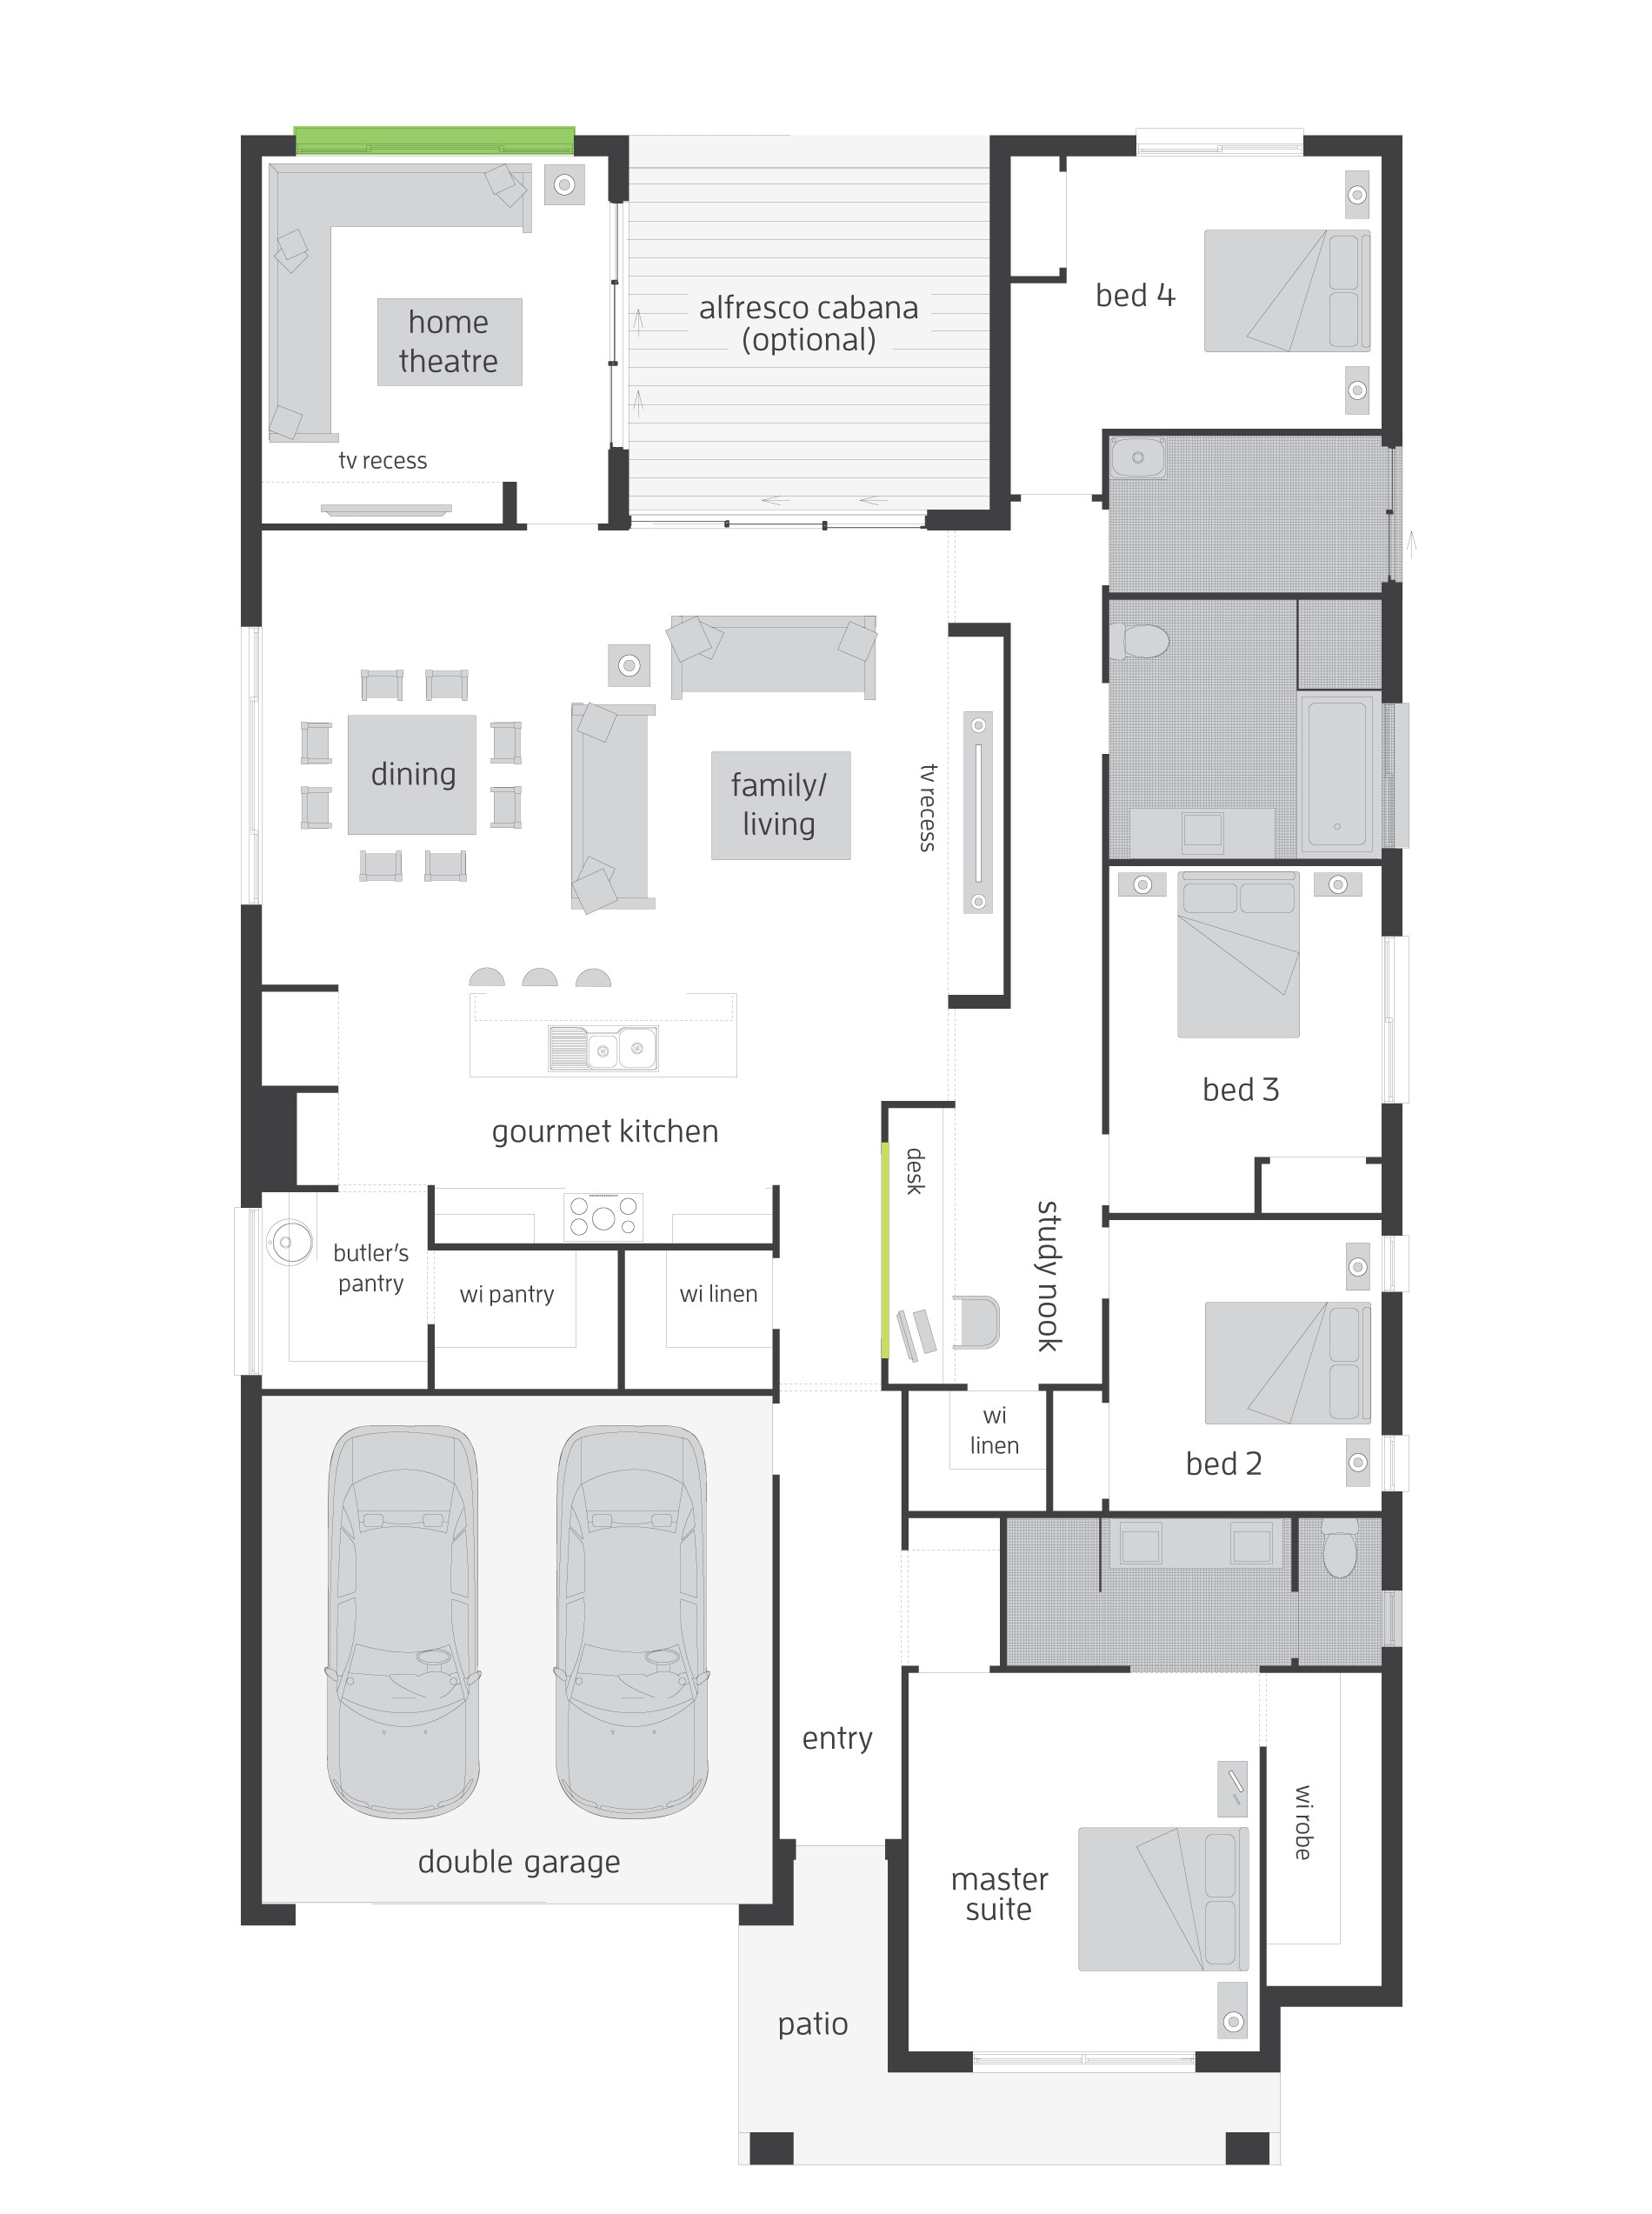 floor plan friday 4 bedroom with theatre study nook butlers pantry